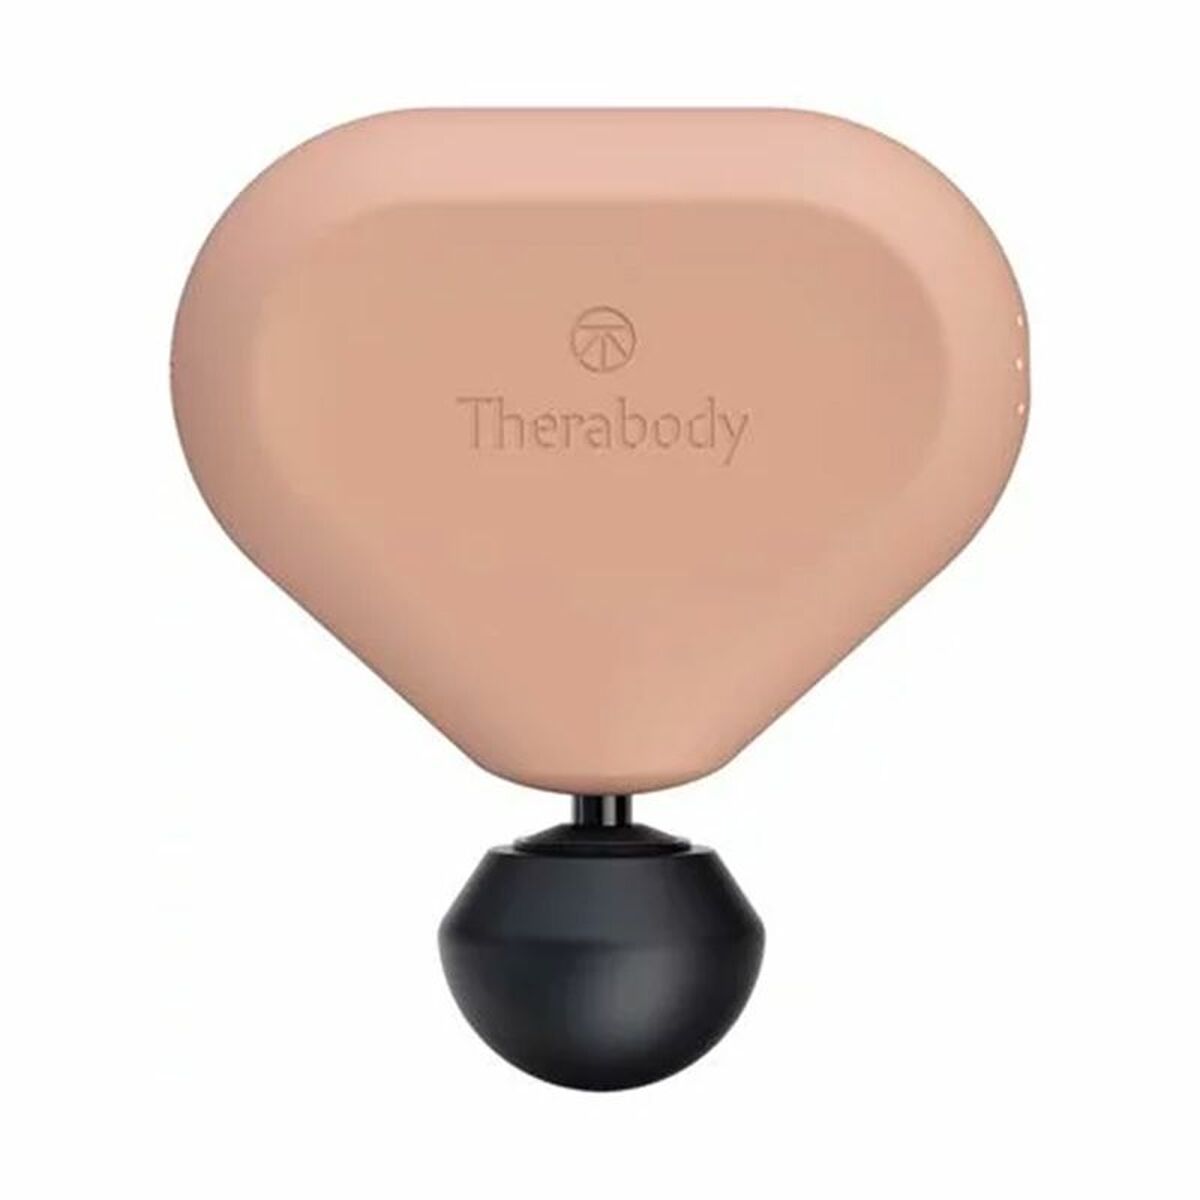 Massagevorrichtung Therabody TG02451-01